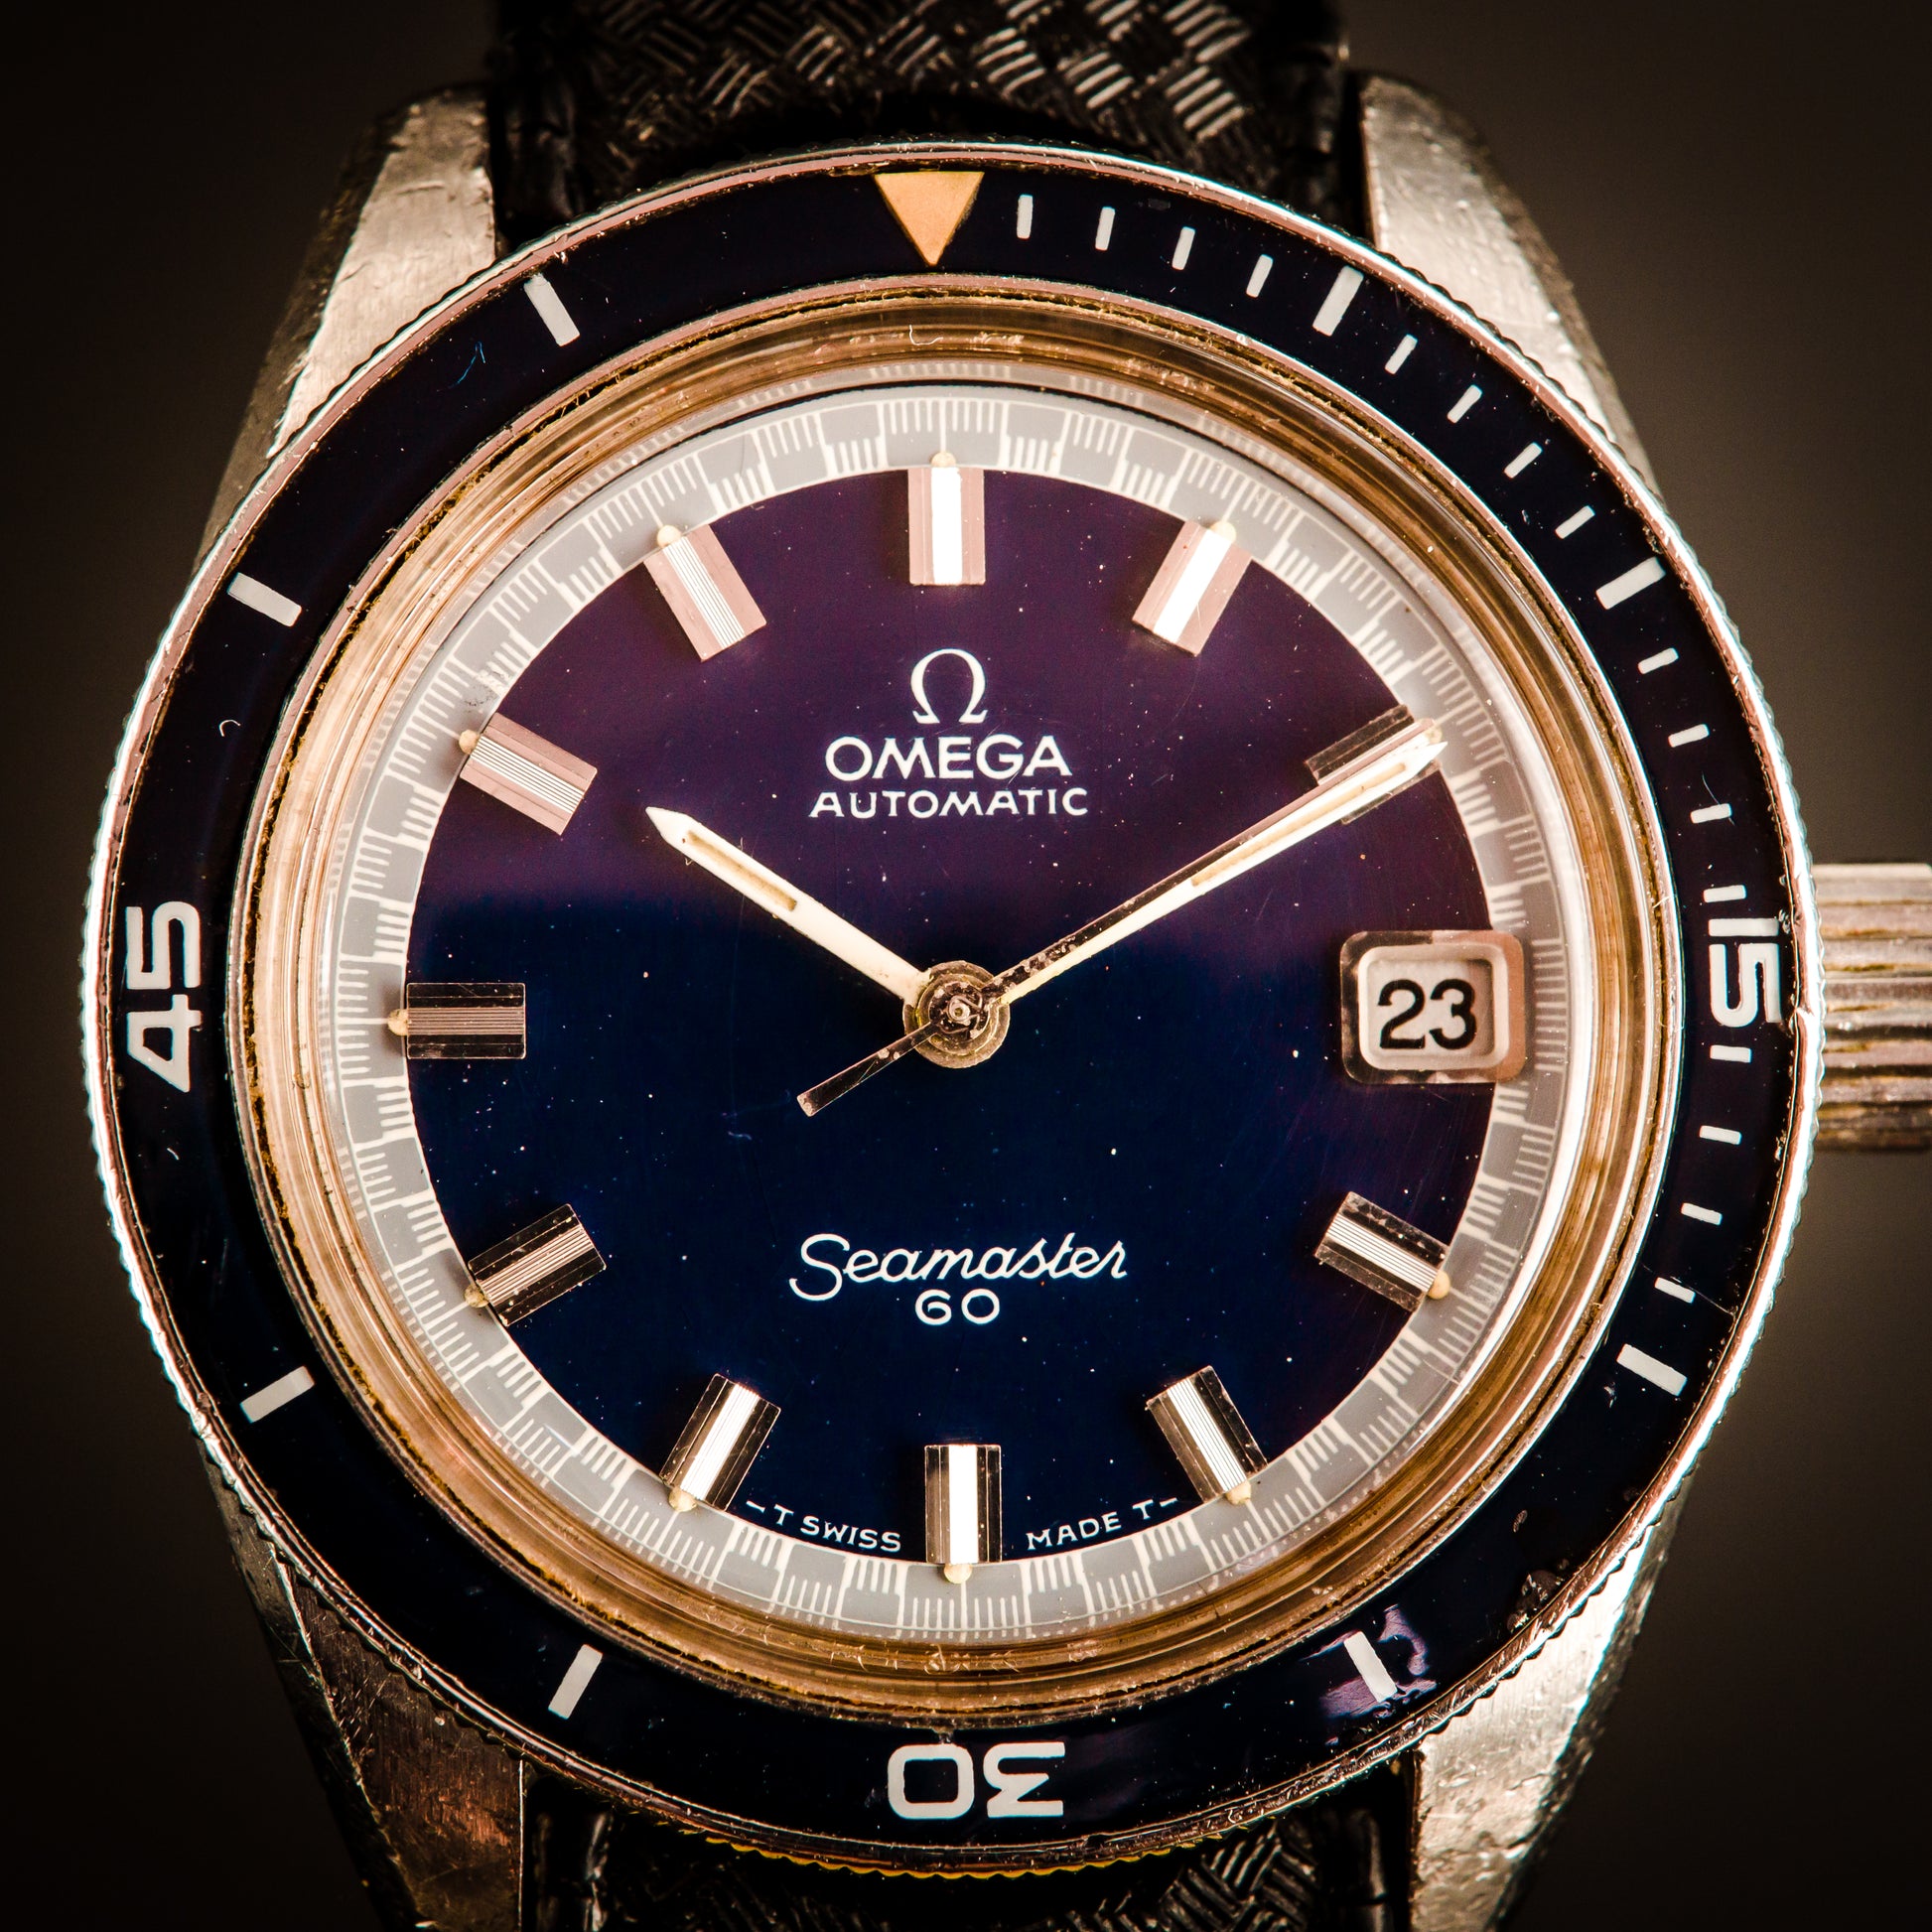 Omega Seamaster 60 - L'Atelier du Temps